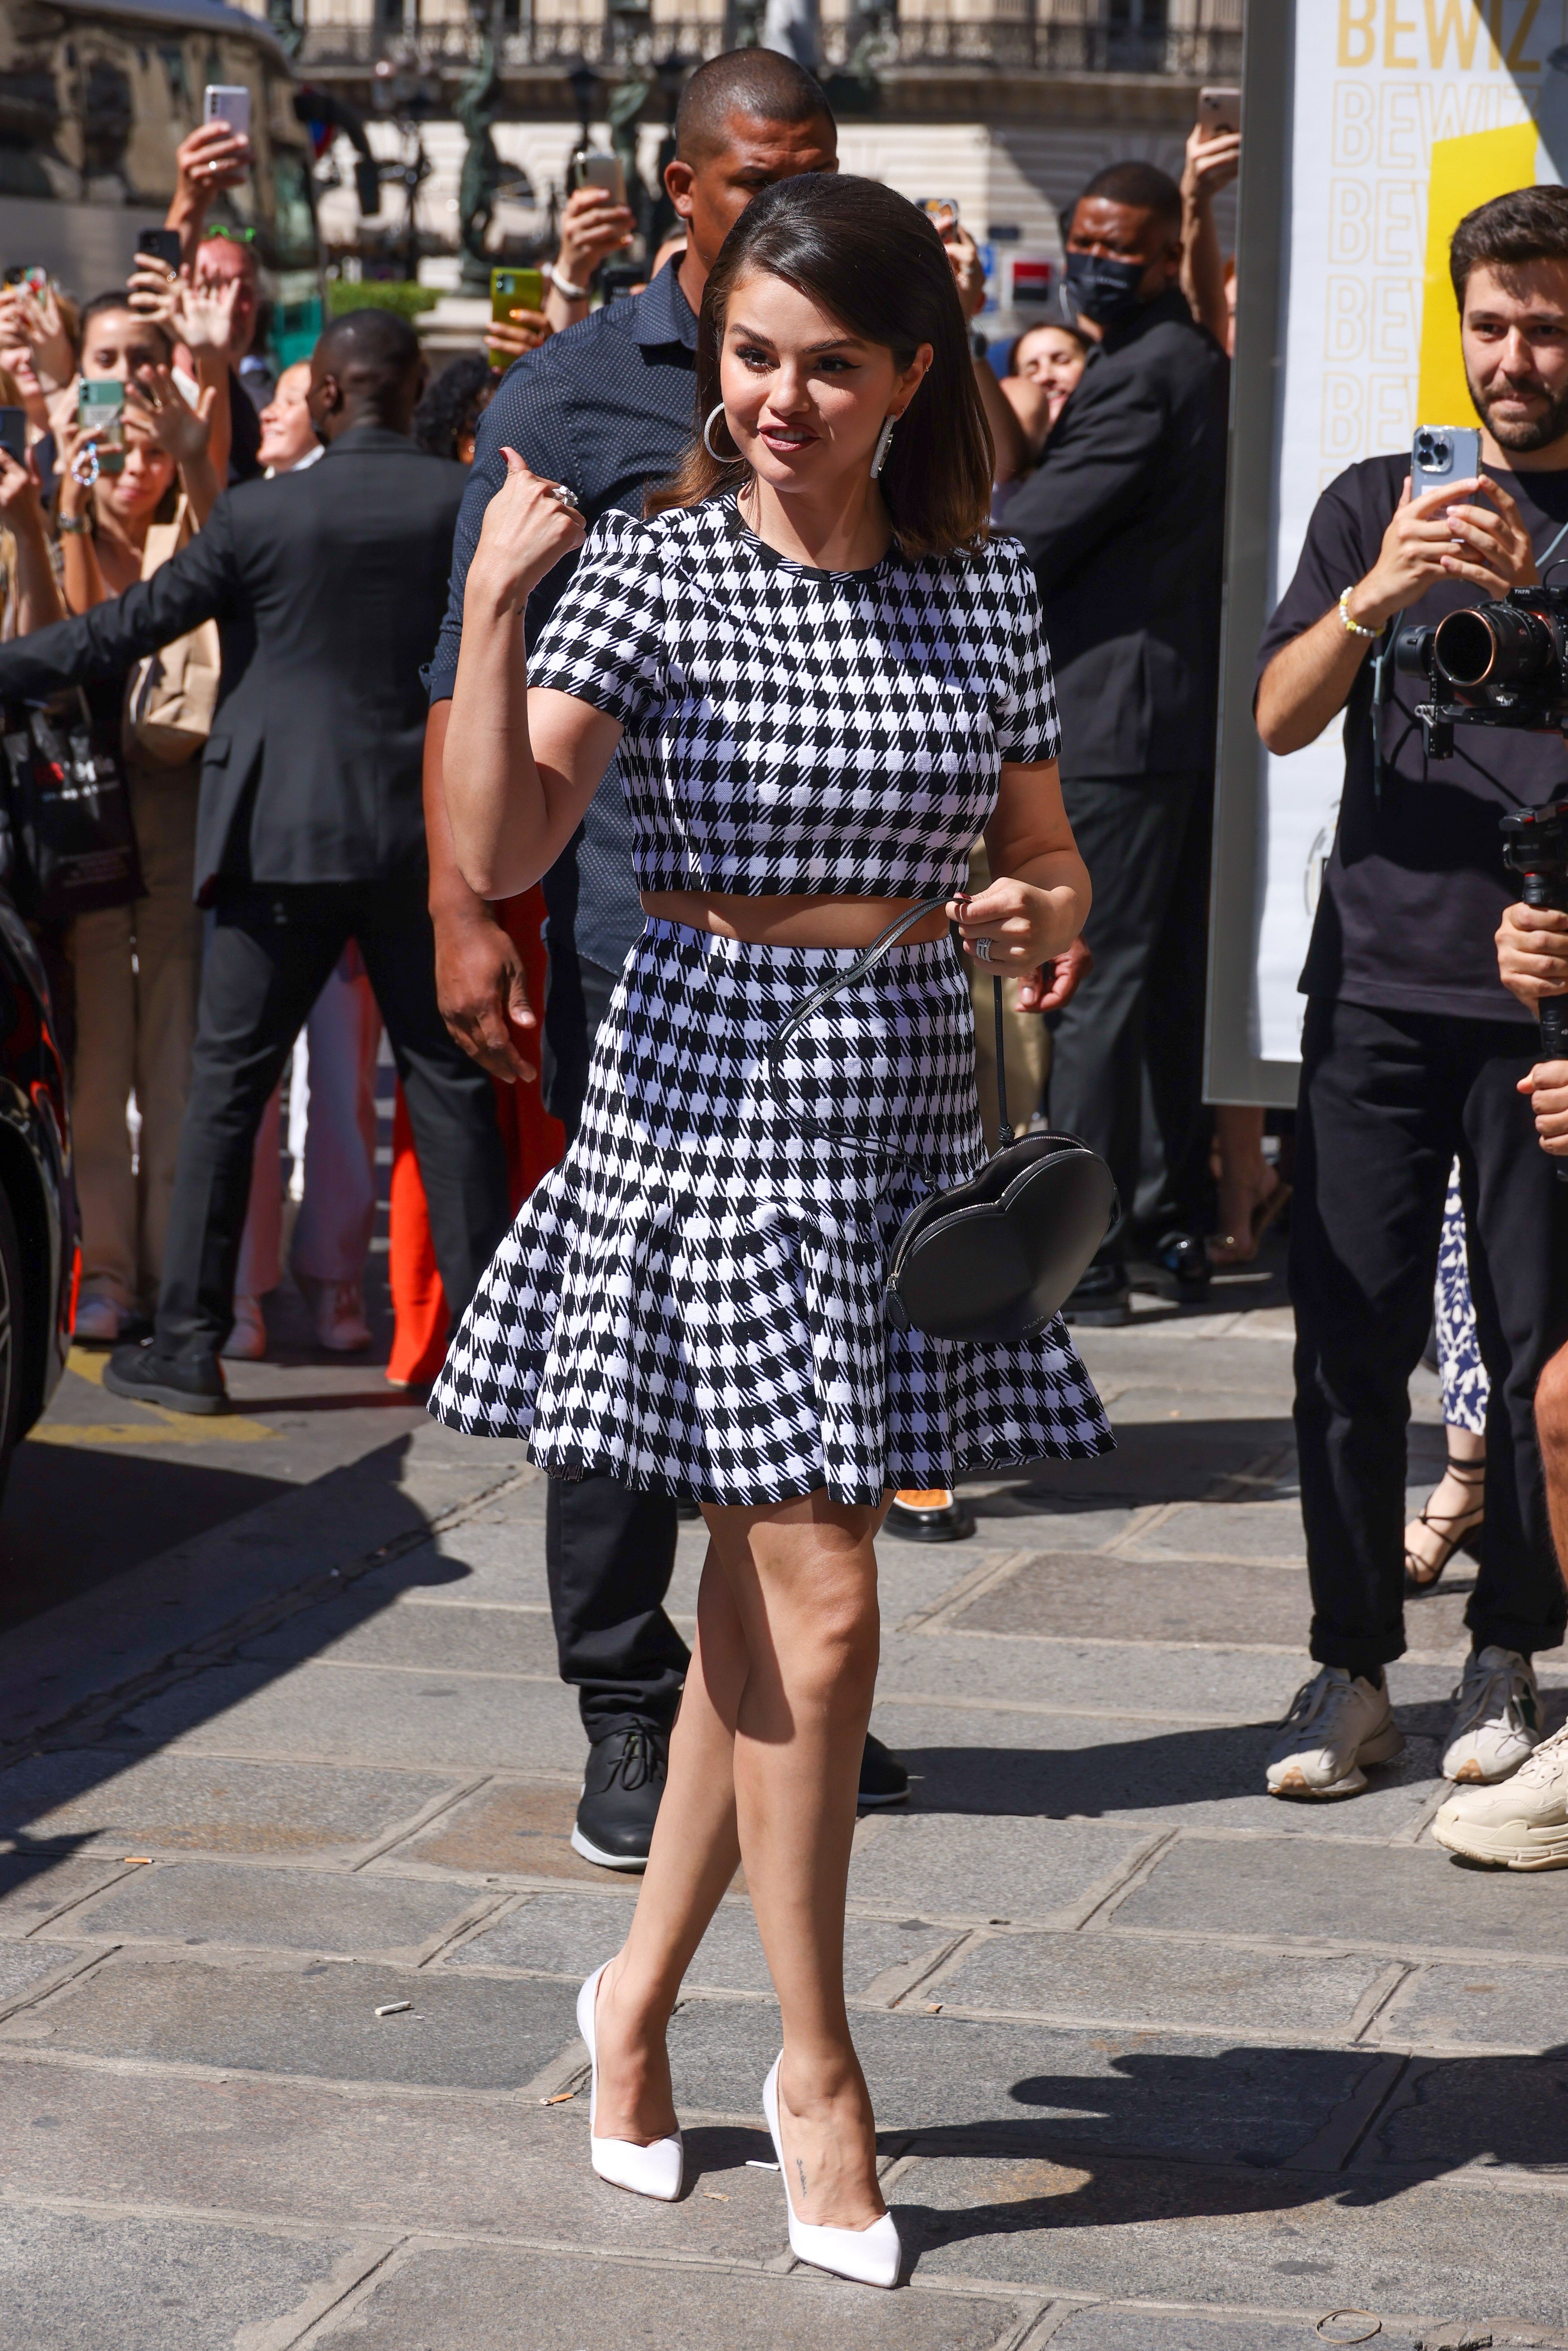 Selena Gomez Looks Poised in Polka Dots During Paris Fashion Week